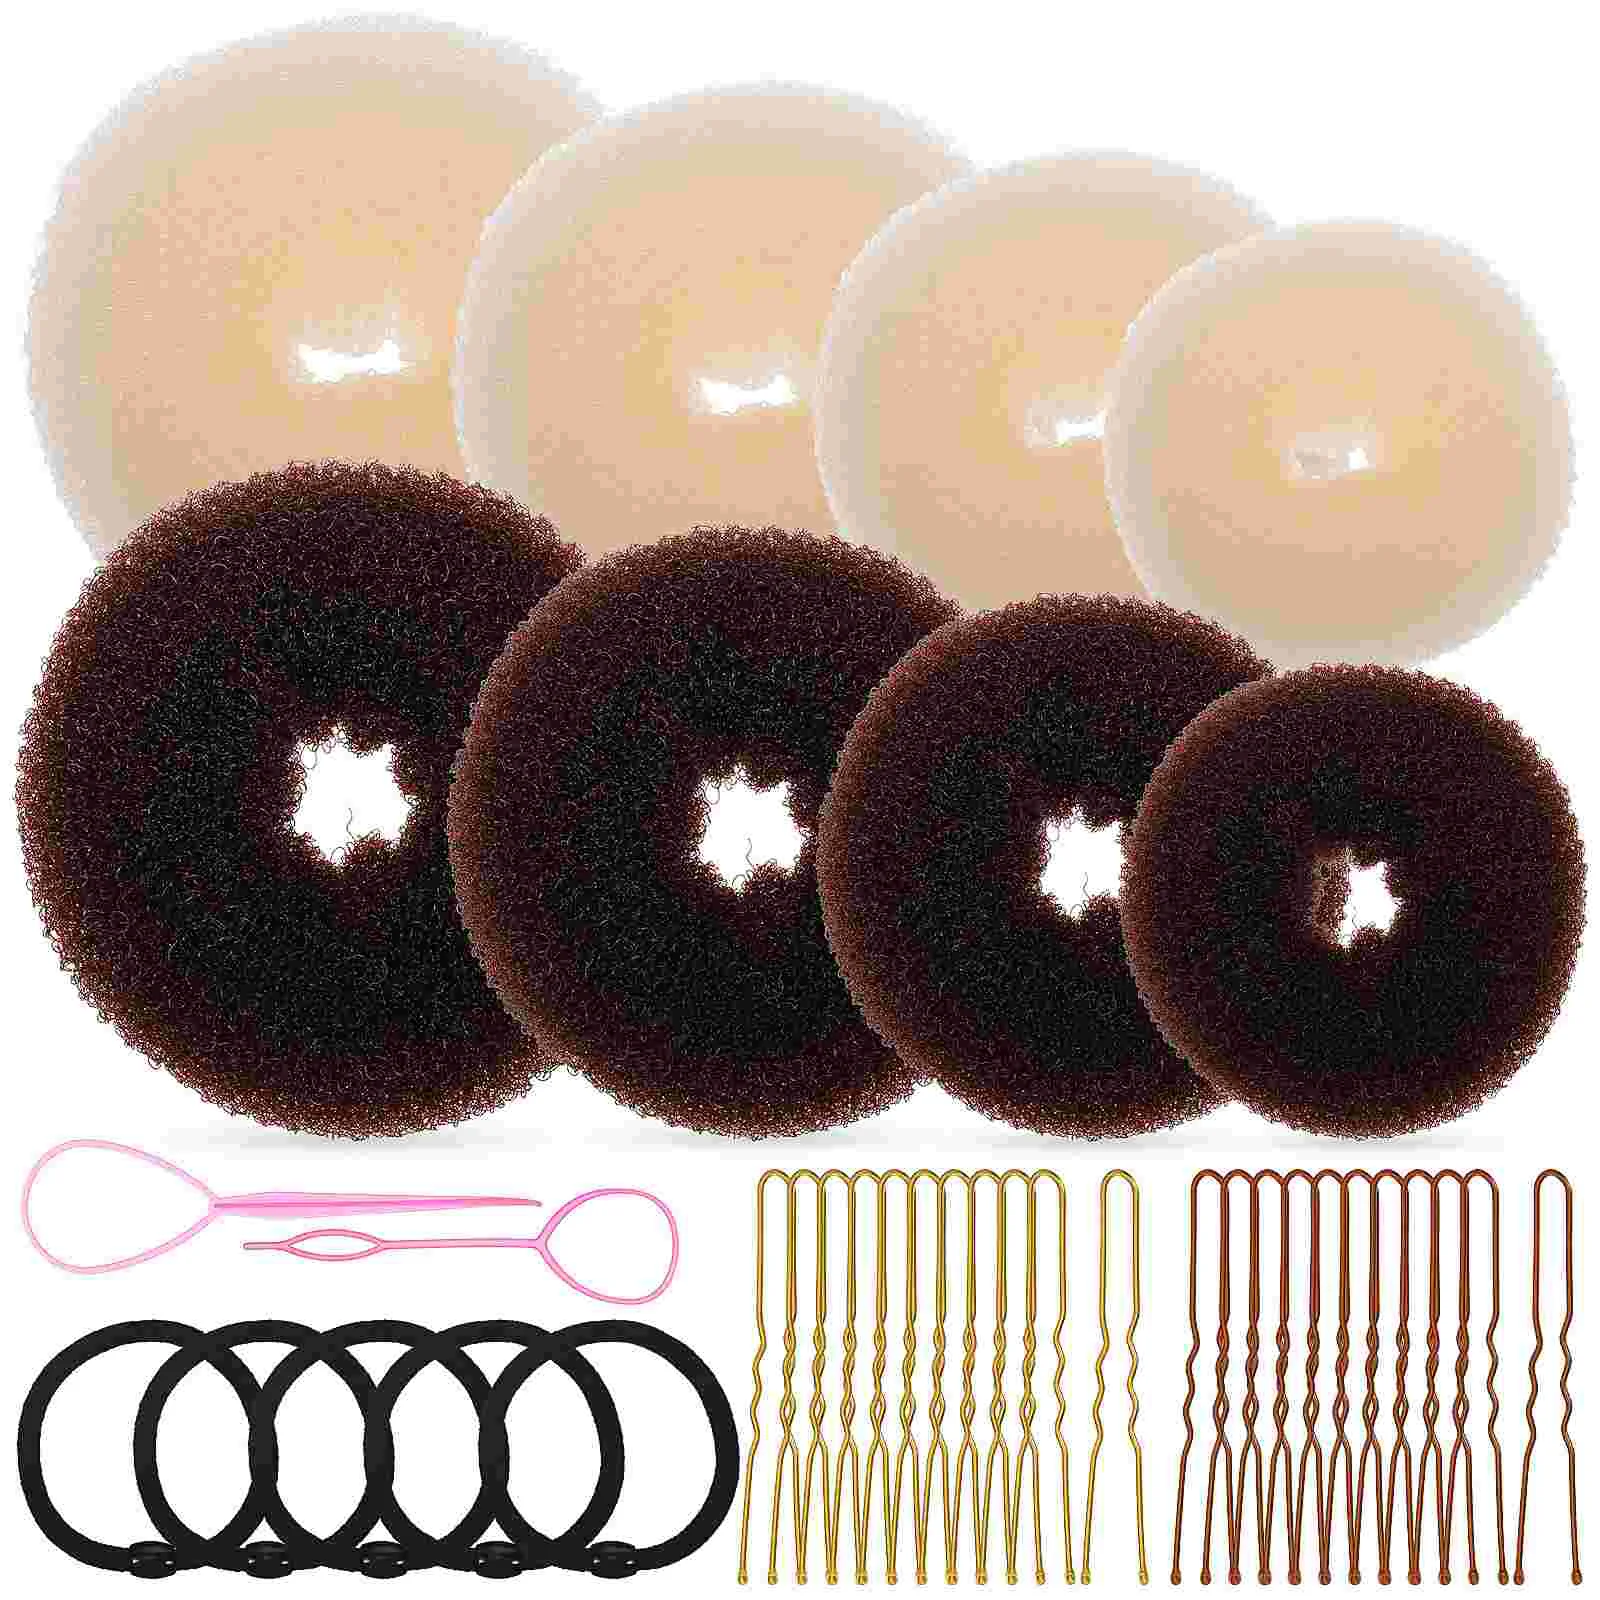 

Doughnuts Hair Bun Accessories For Women Hairstyle Supply Female Maker Plastic Small Shaper Donut